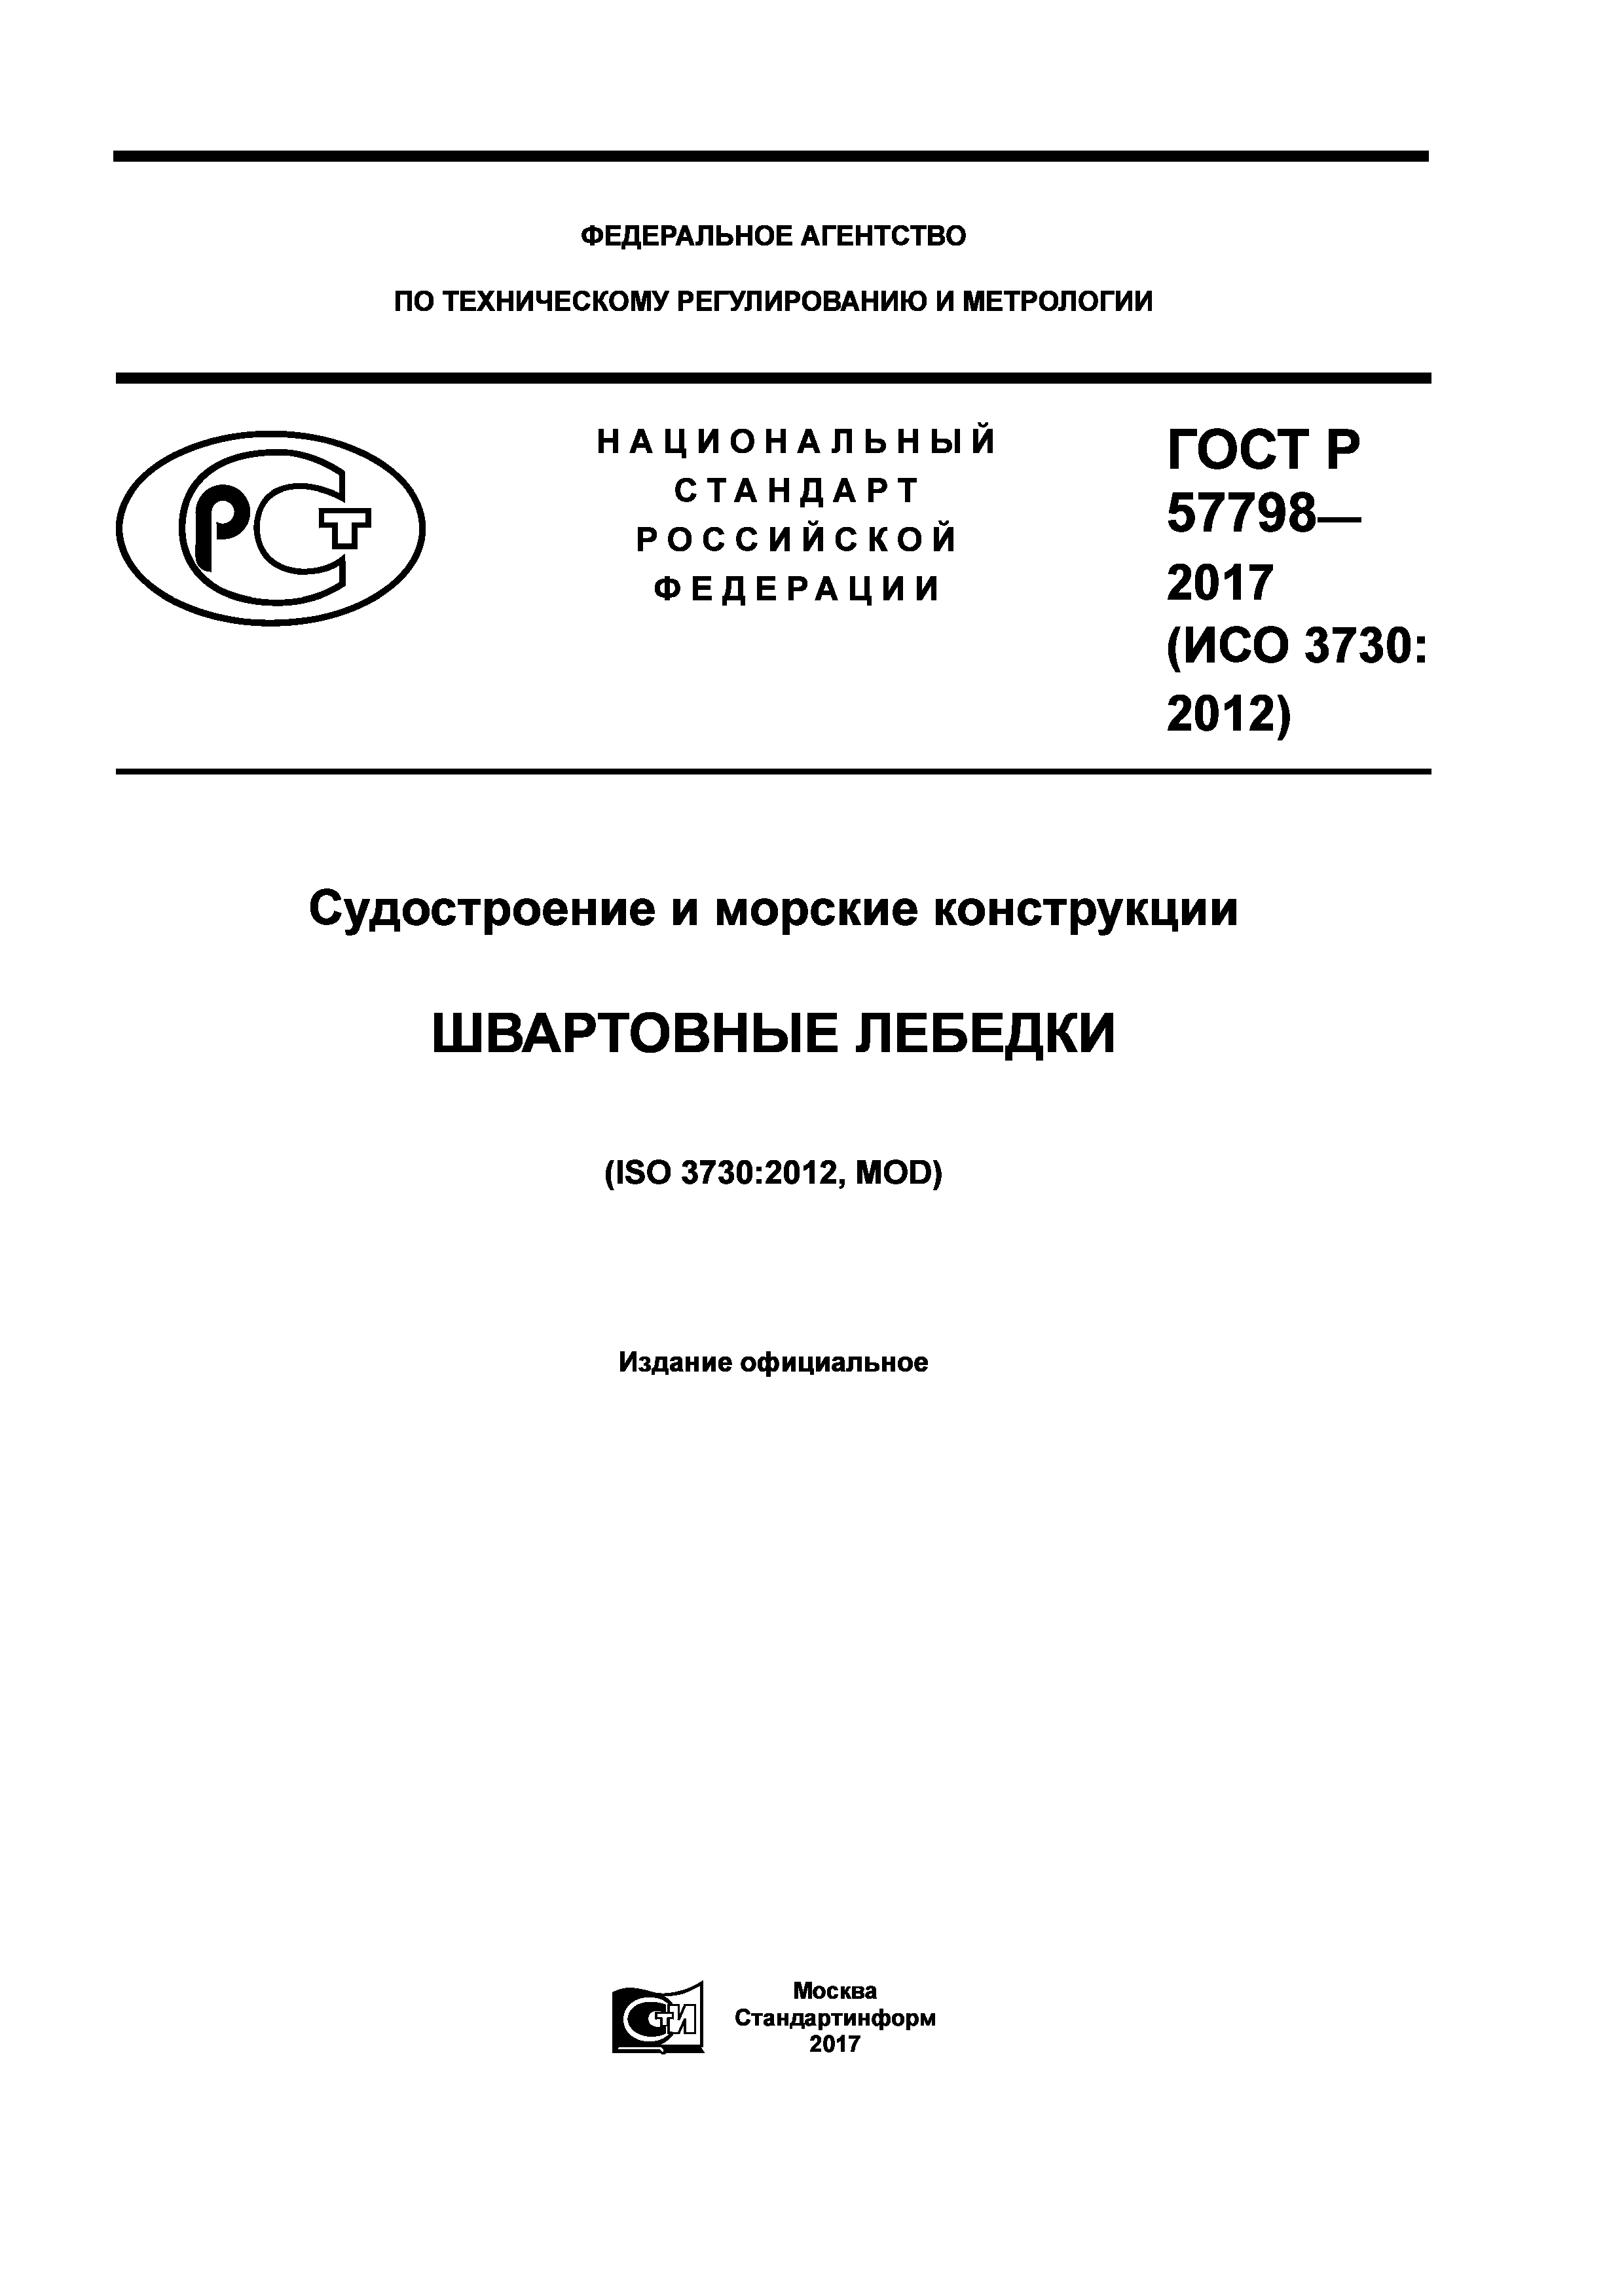 ГОСТ Р 57798-2017